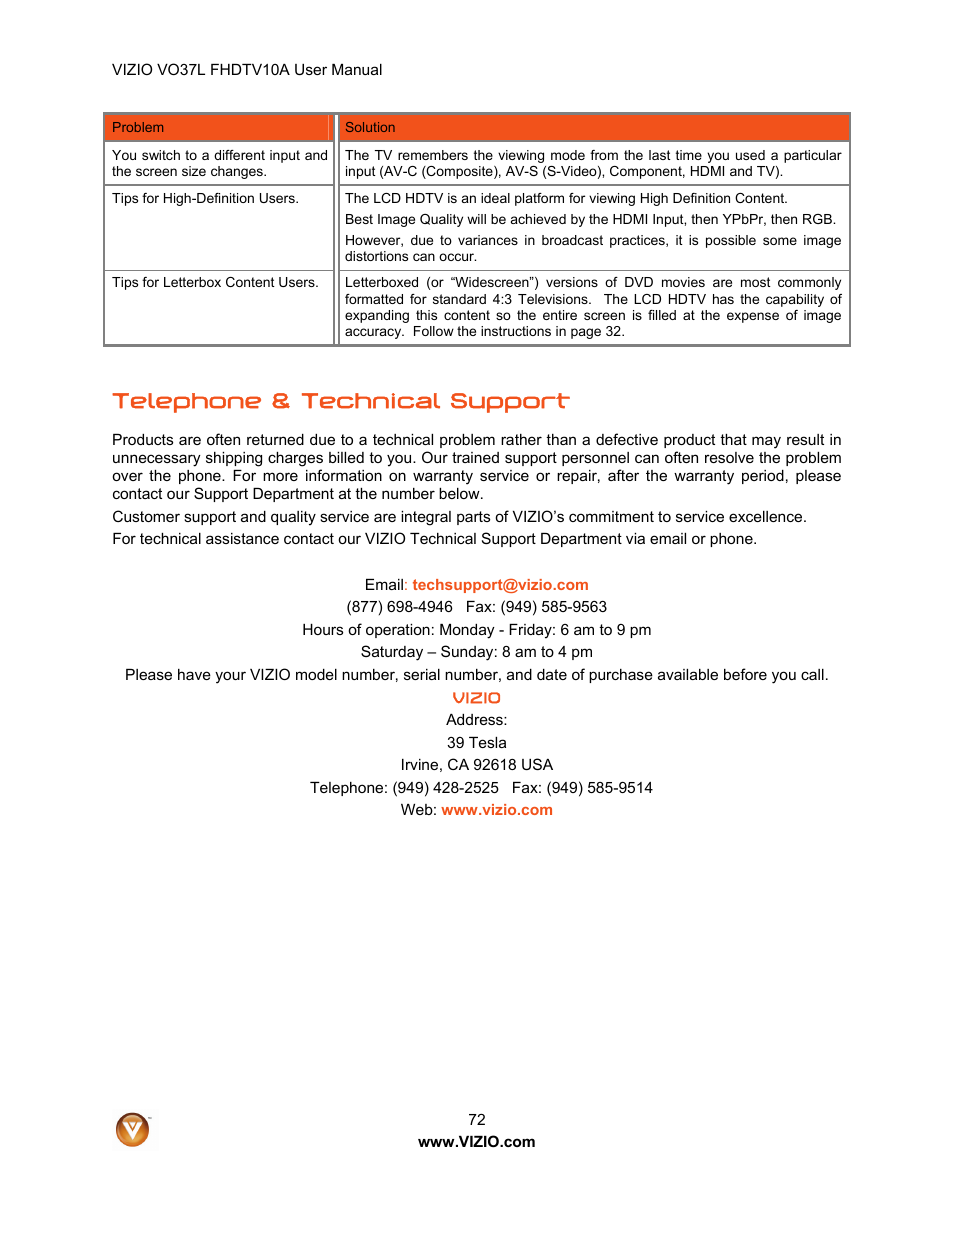 Telephone & technical support | Vizio VO37L FHDTV10A User Manual | Page 72 / 80